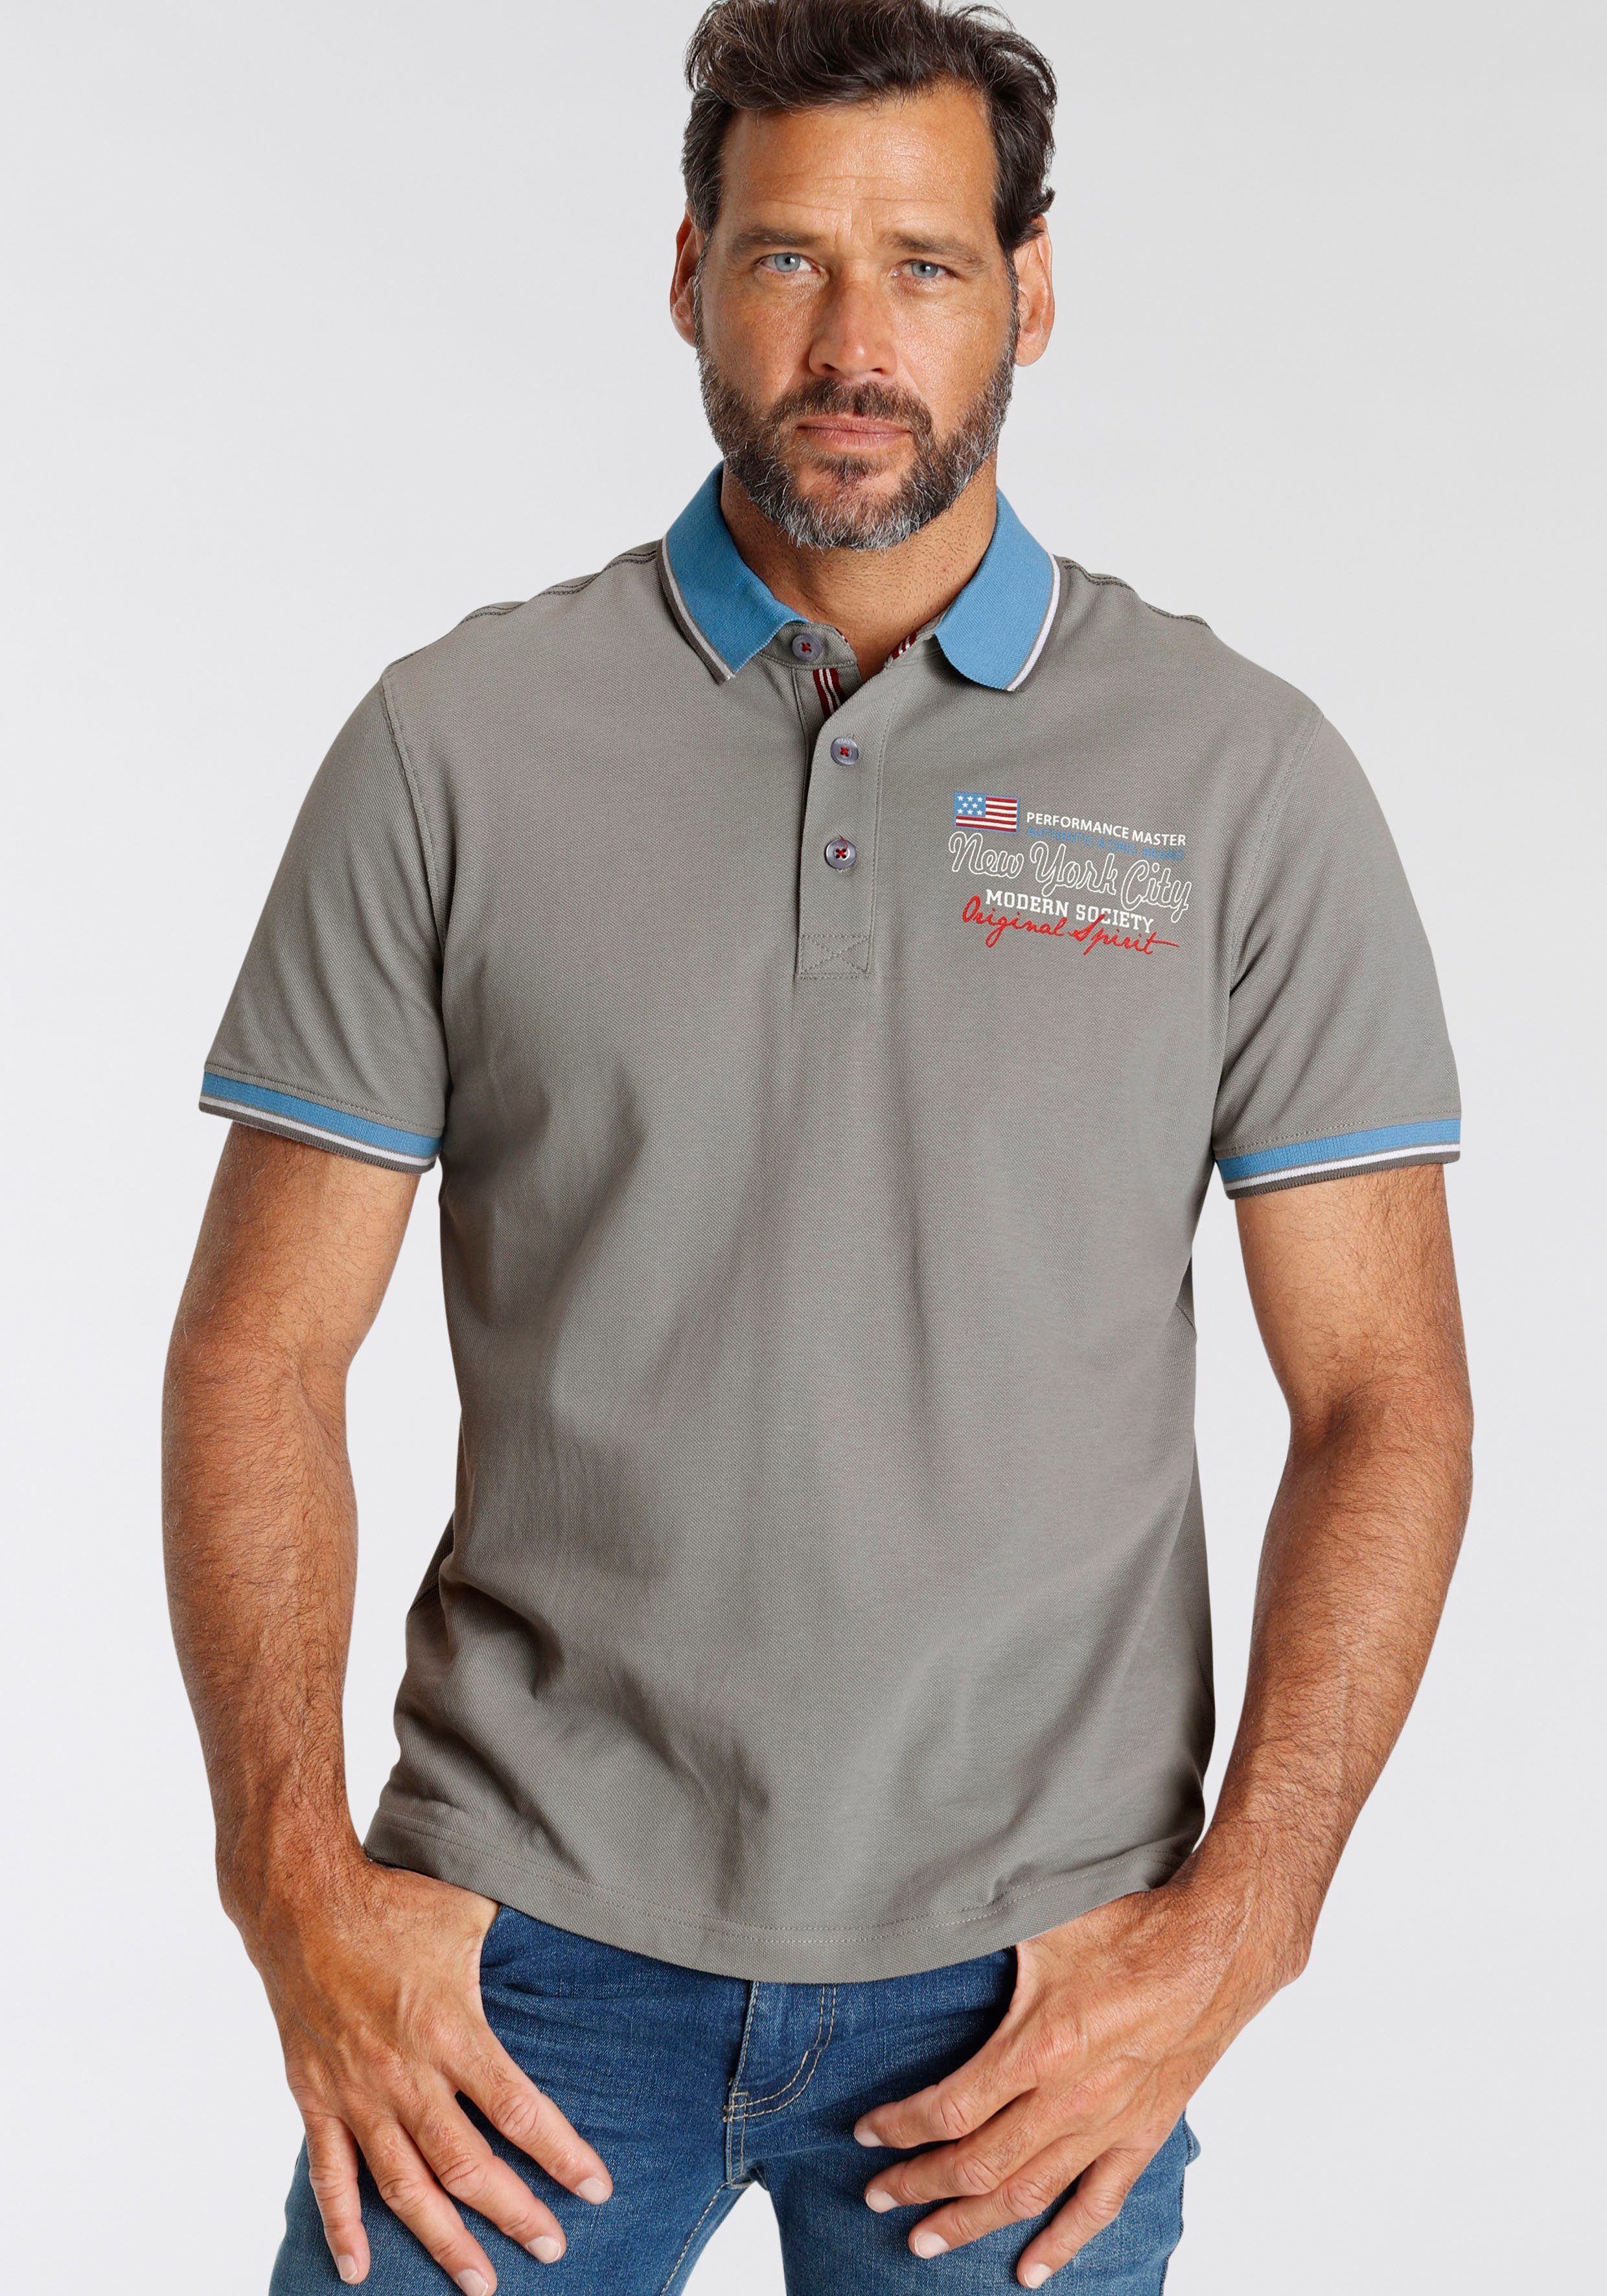 Man's World Poloshirt mit kleinem Brustprint grau